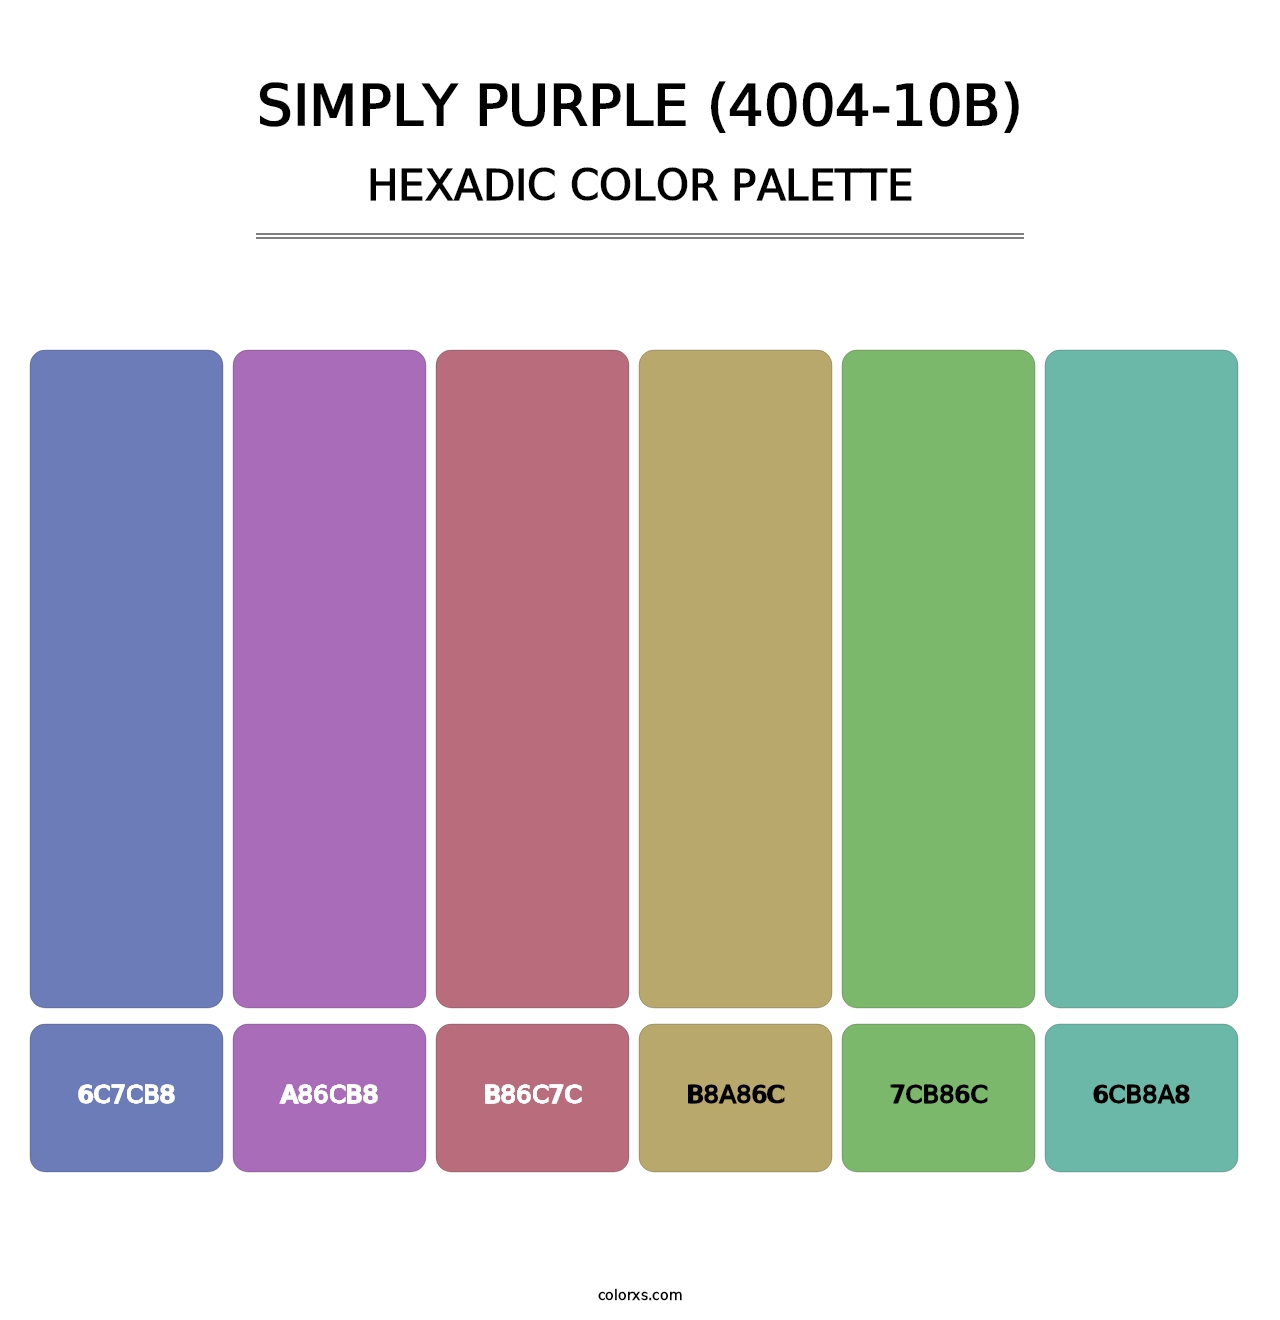 Simply Purple (4004-10B) - Hexadic Color Palette